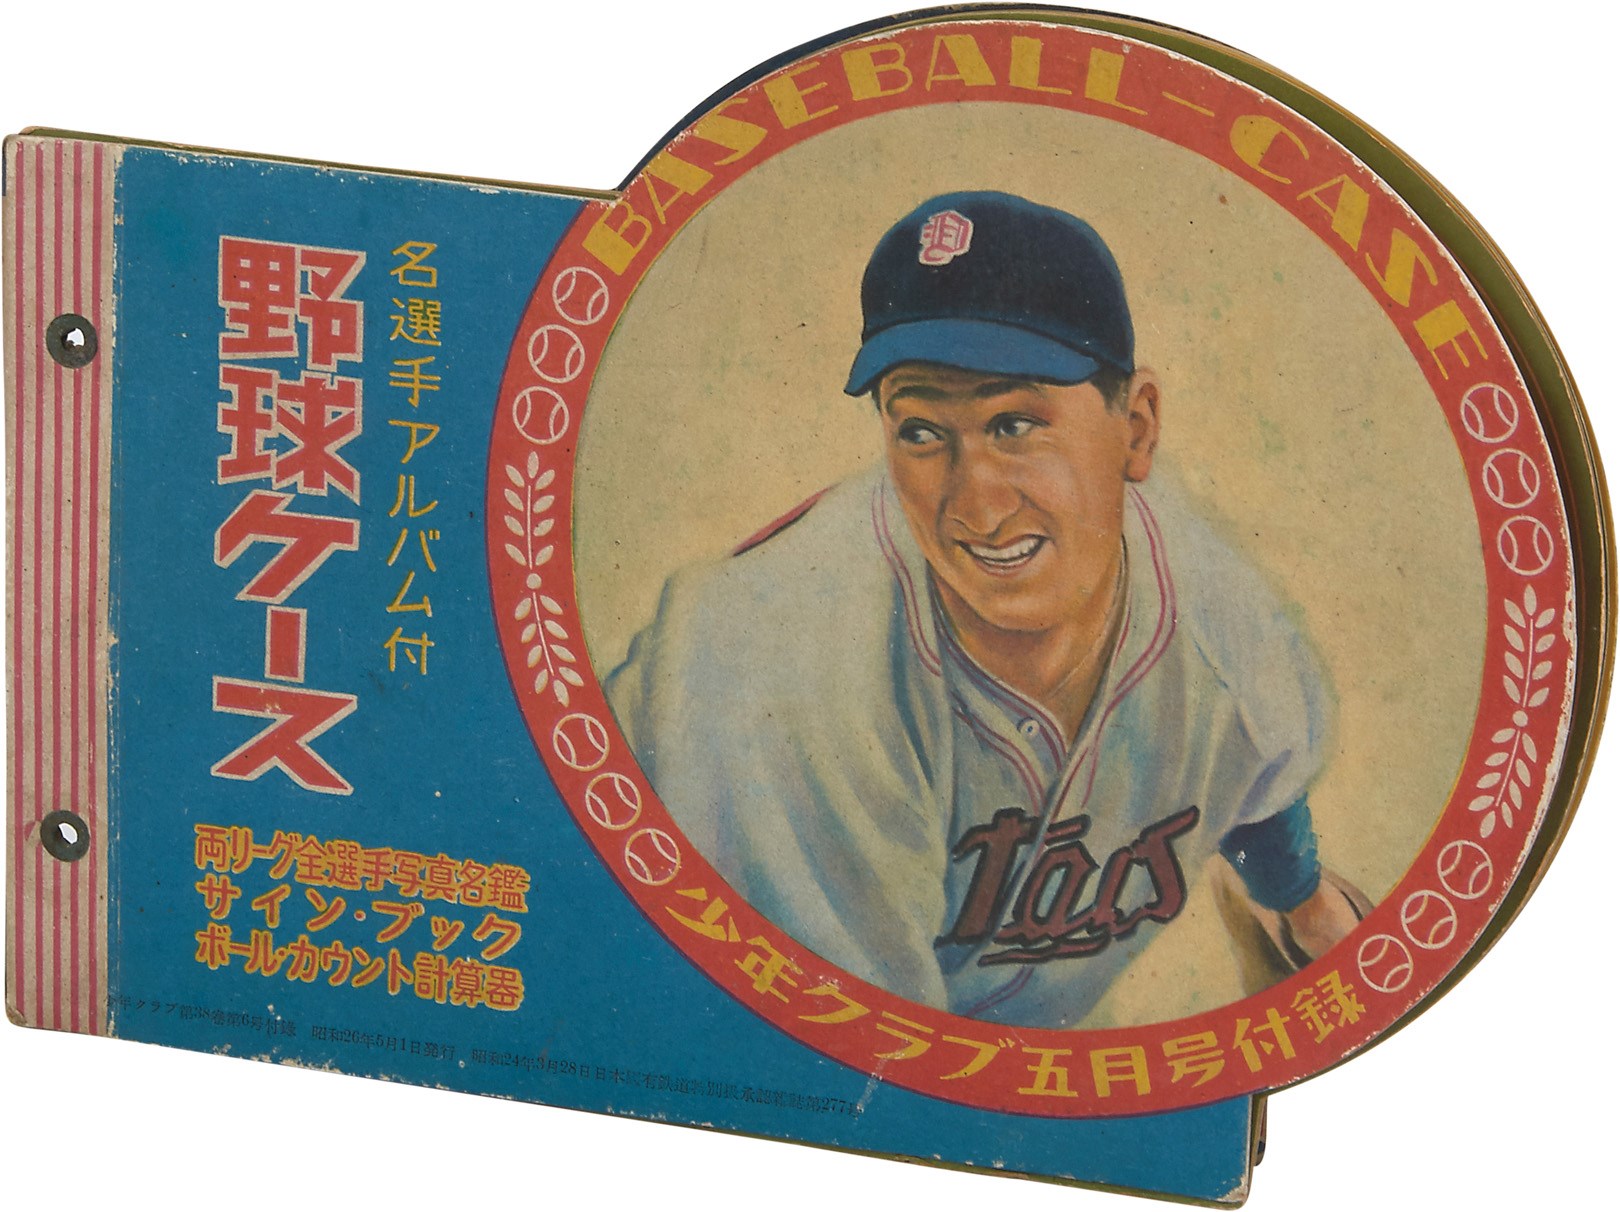 Negro League, Latin, Japanese & International Base - 1951 Japanese "All-Star" Baseball Pin-up Book